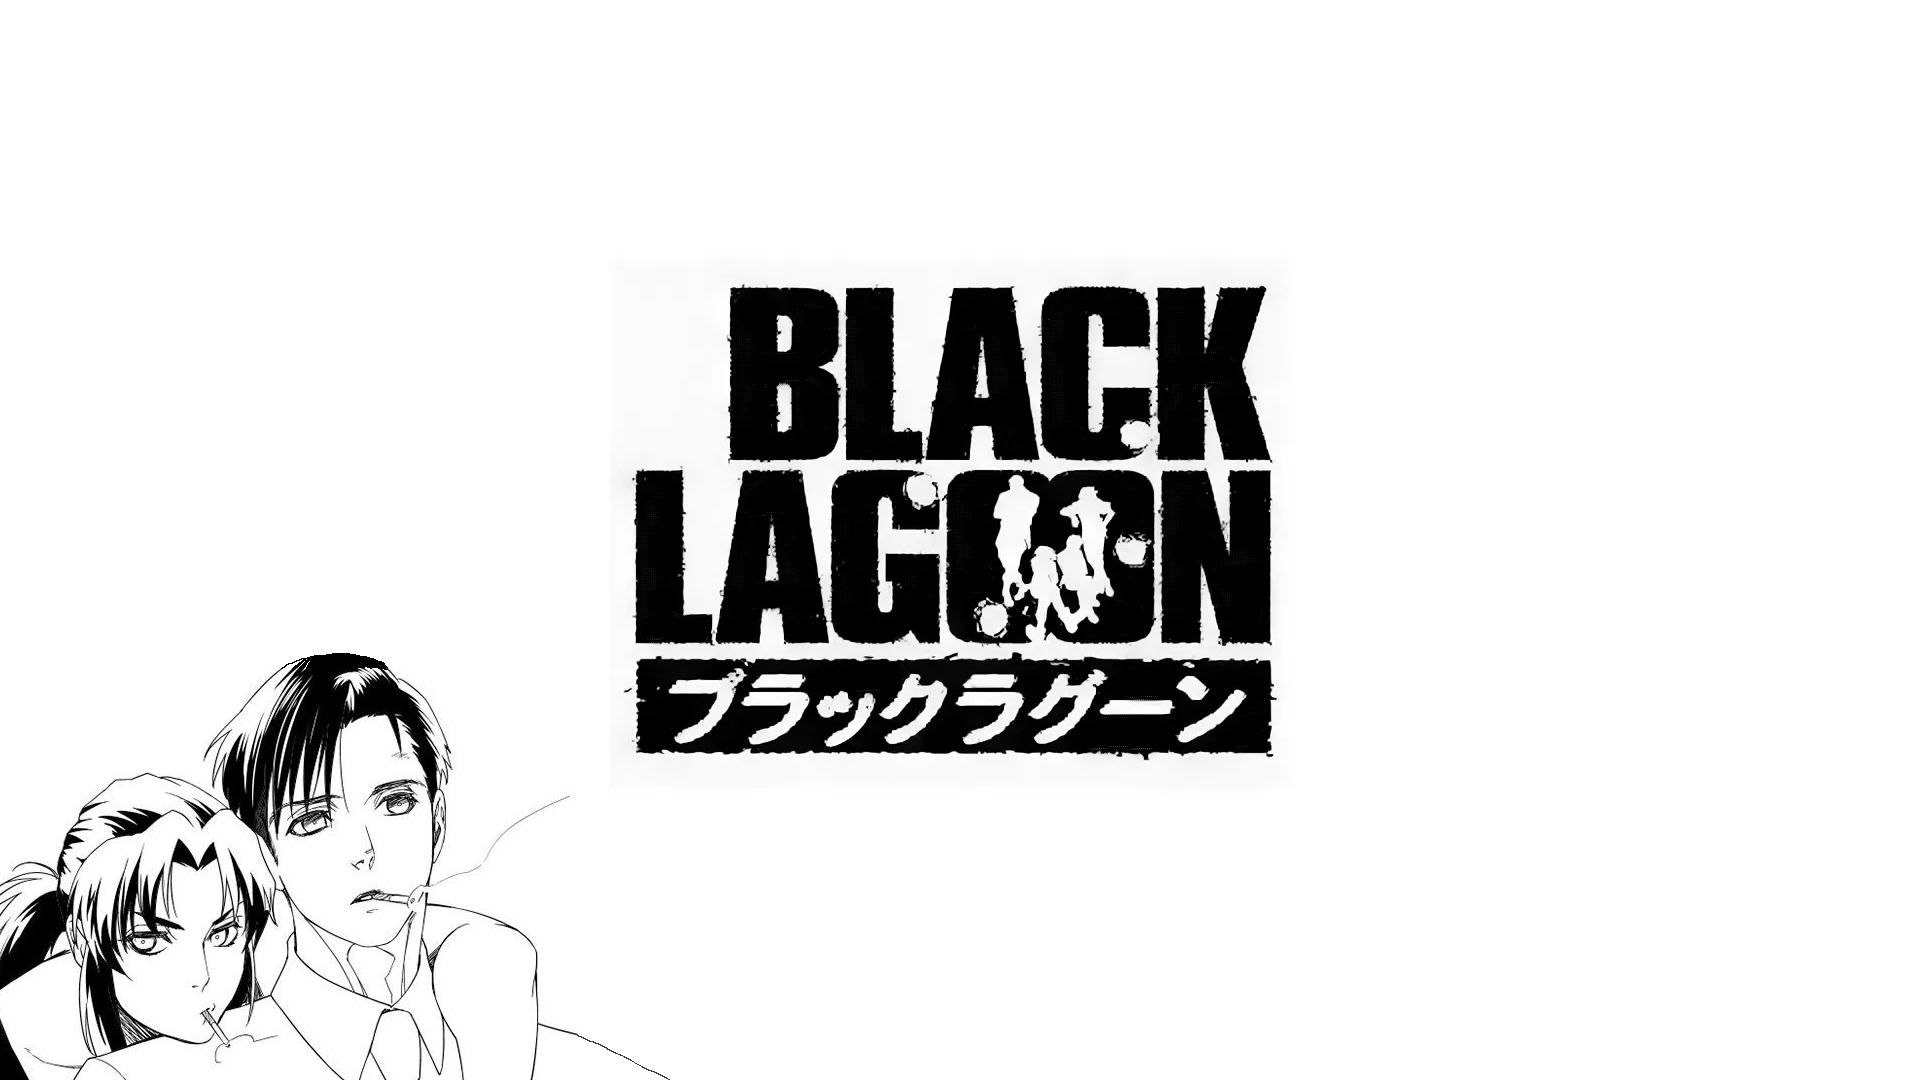 Revy - Black Lagoon | page 2 of 9 - Zerochan Anime Image Board